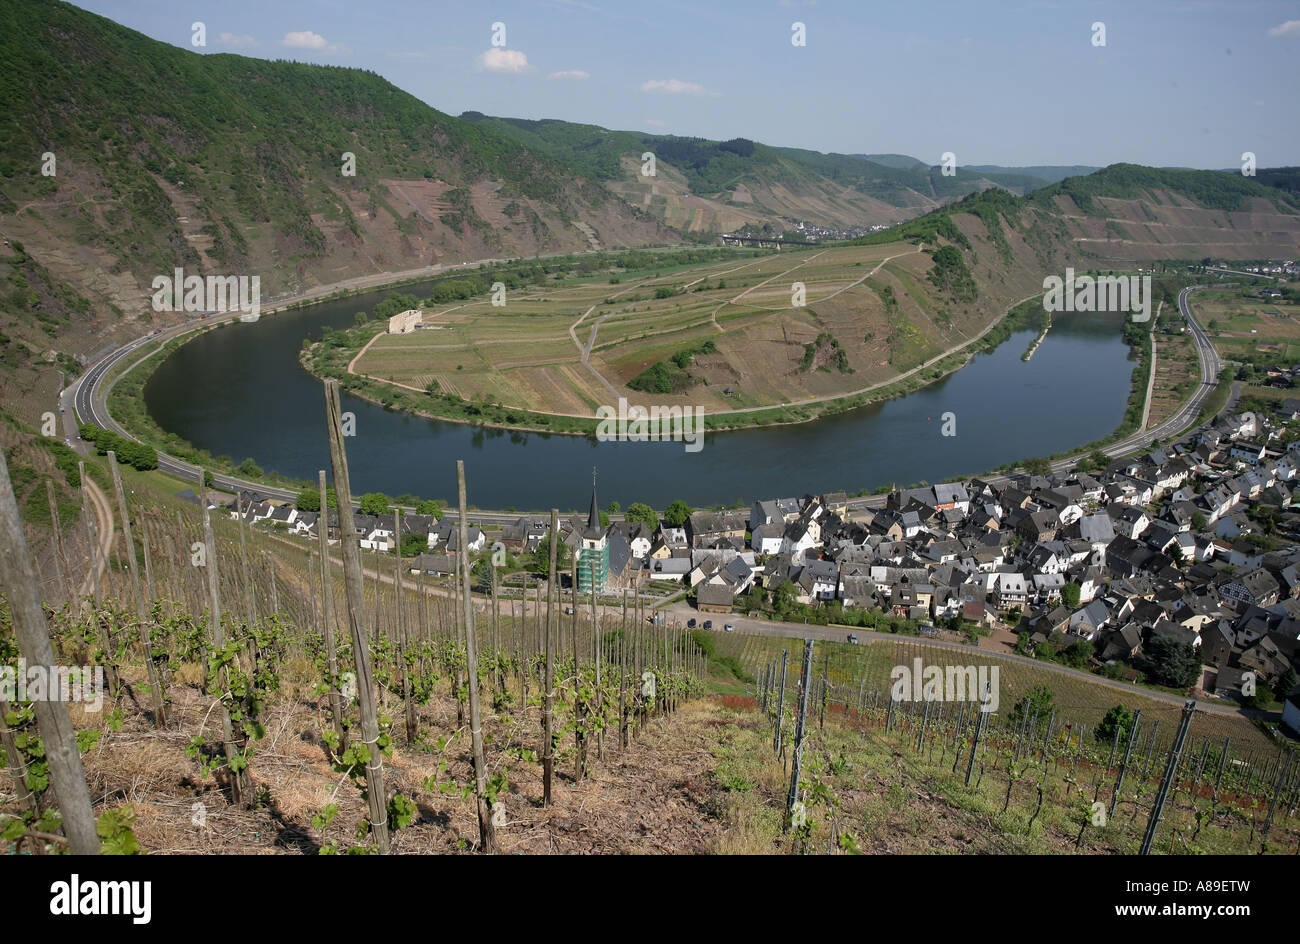 Vineyard near Bremm in the moselle valley, Rhineland-Palatinate Germany Stock Photo